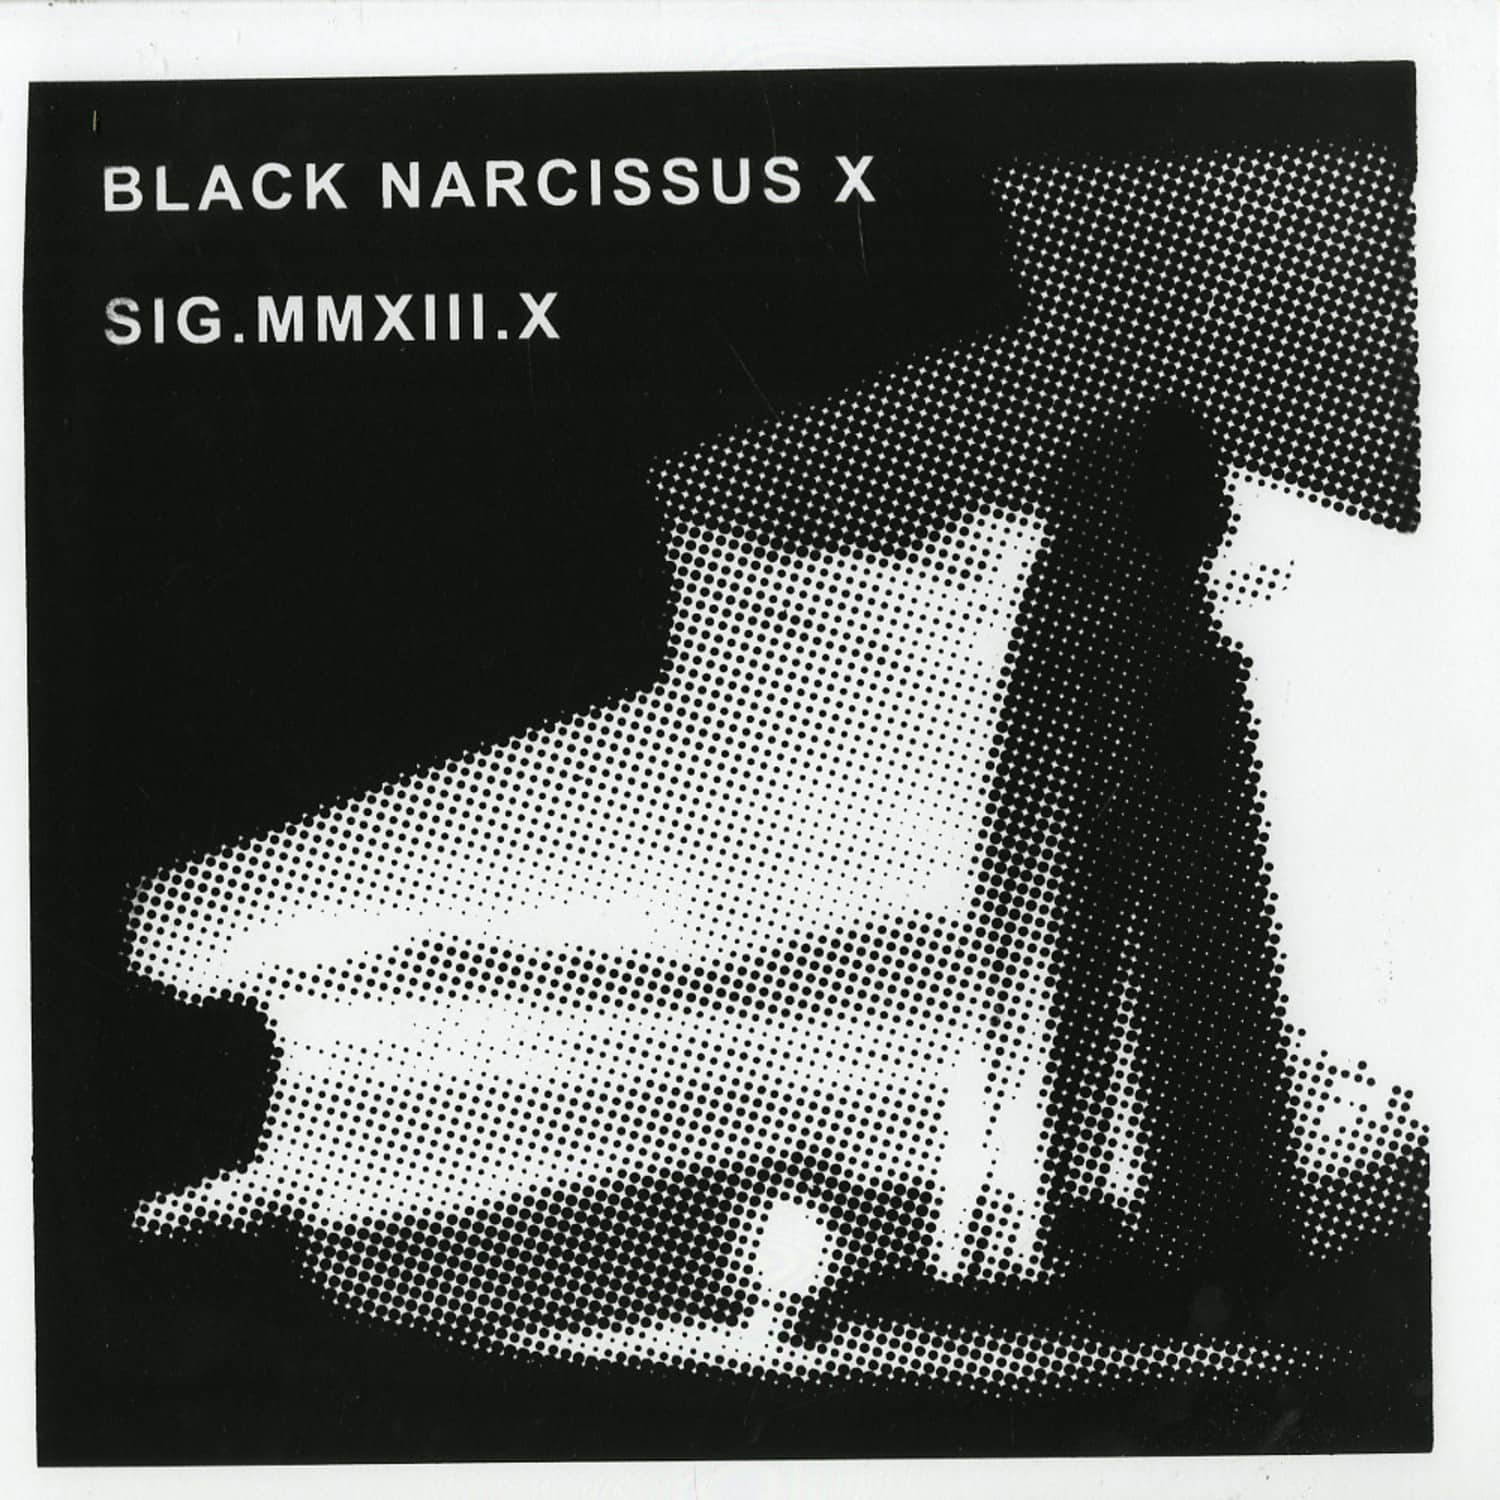 Black Narcissus X - Black Narcissus X